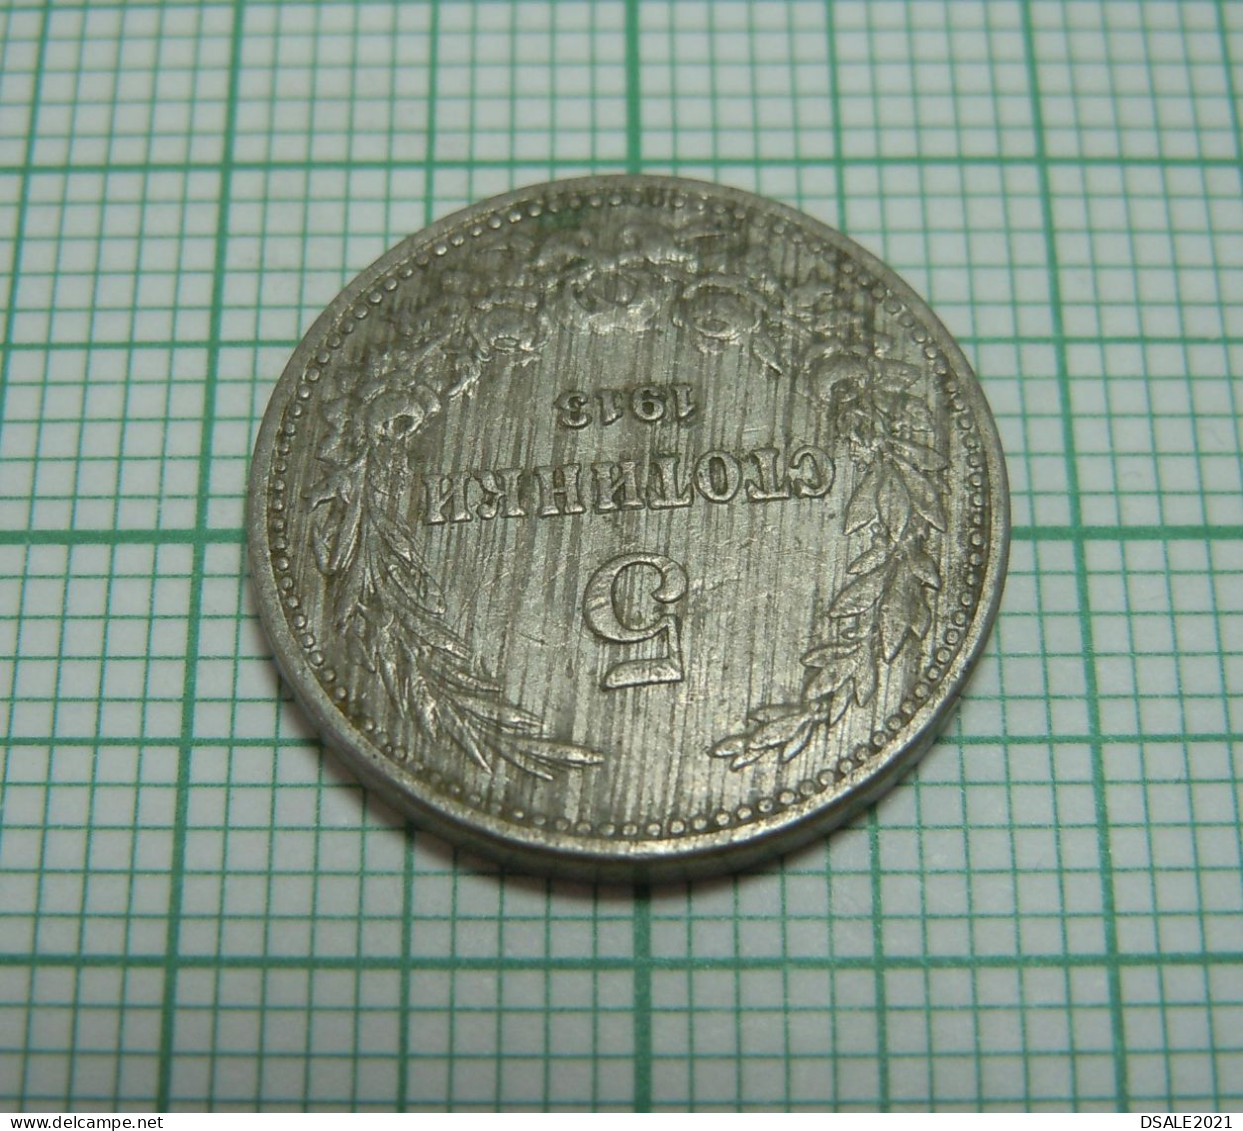 Bulgaria Ferdinand I Coin, 5 Stotinki 1913, Cn Coin KM#24, Bulgarie Bulgarien Bulgarije, Münze 5 Stotinki 1913 (ds1203) - Bulgarie